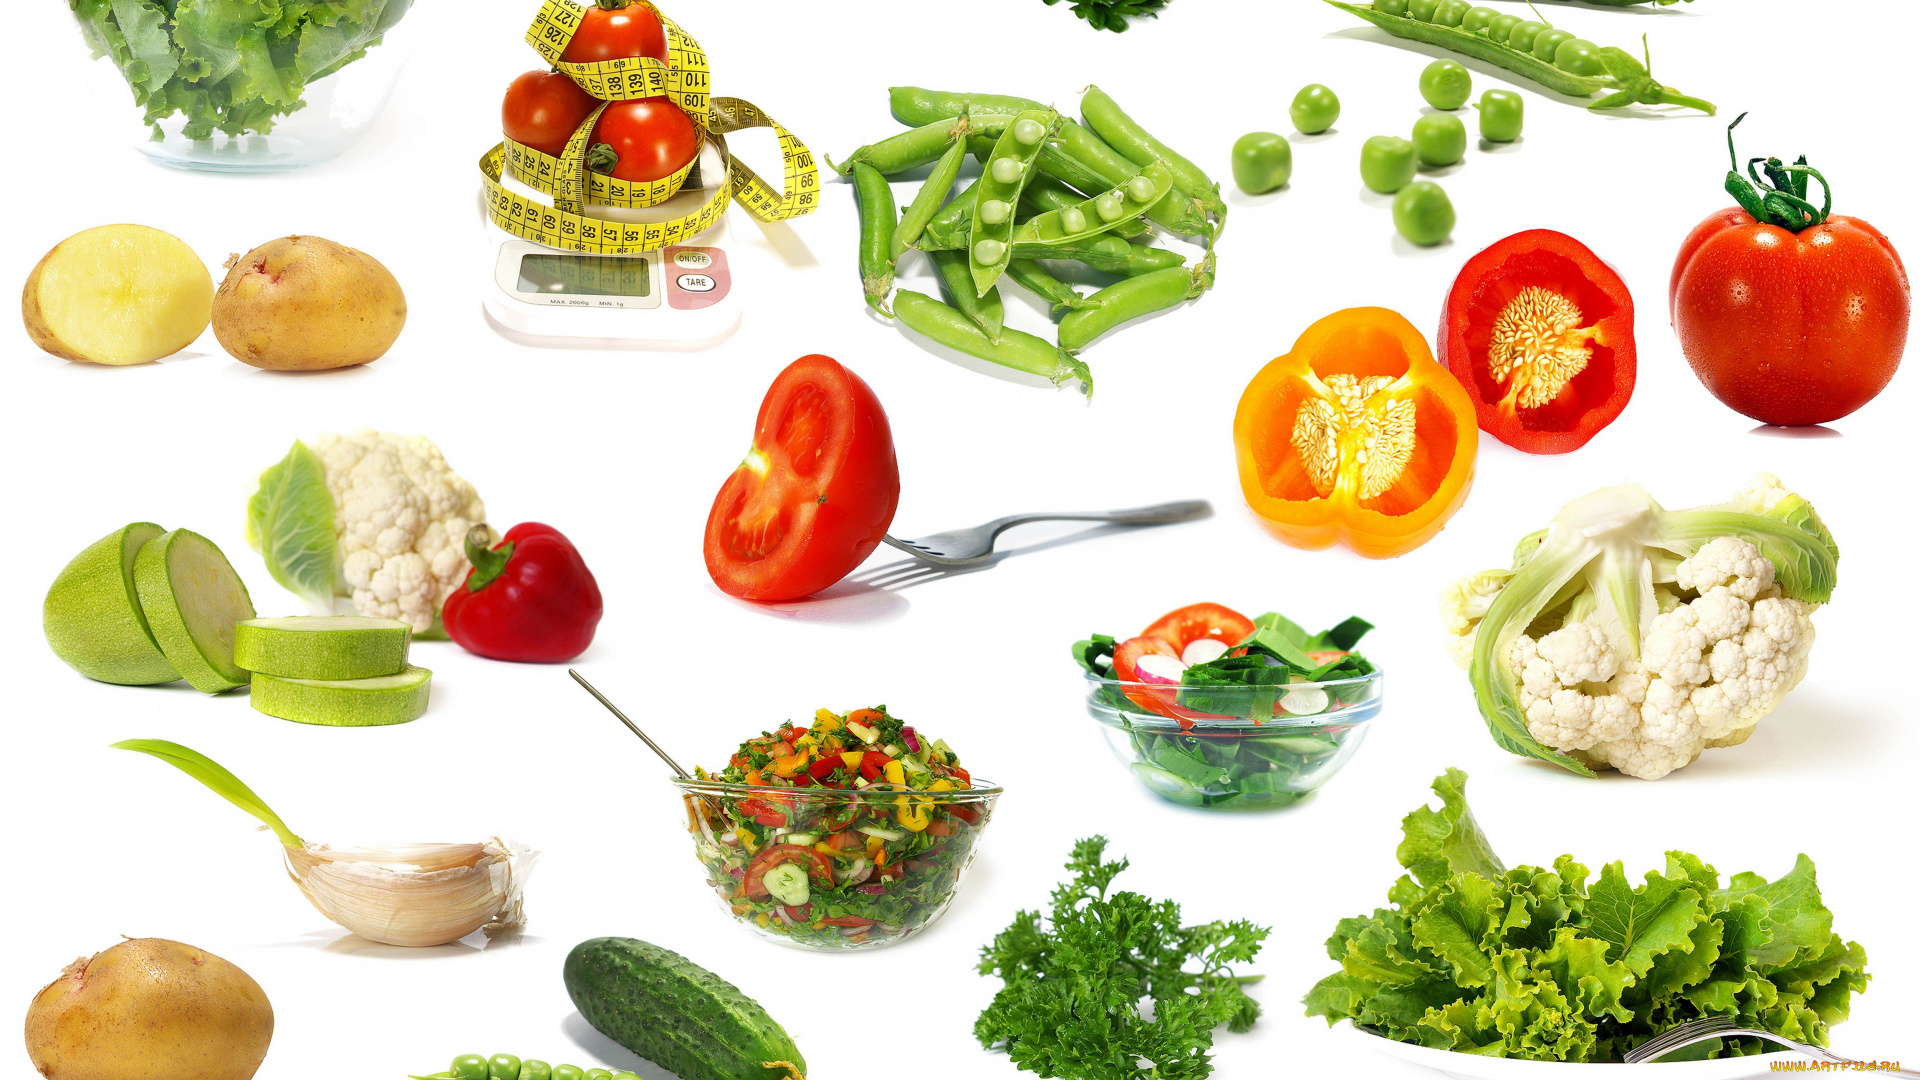 еда, овощи, коллаж, зелень, белый, фон, диета, редиска, салат, огурец, огурцы, томаты